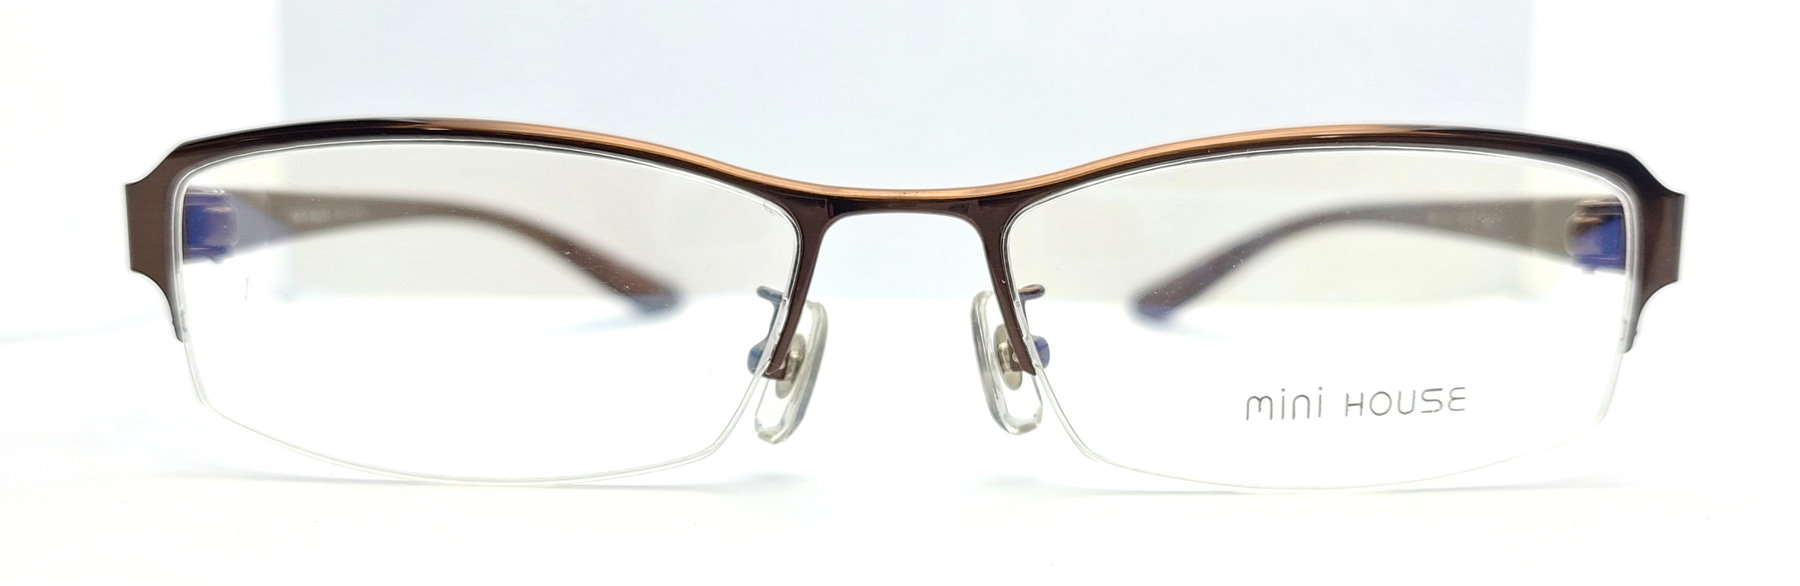 MINIHOUSE M-1104, Korean glasses, sunglasses, eyeglasses, glasses